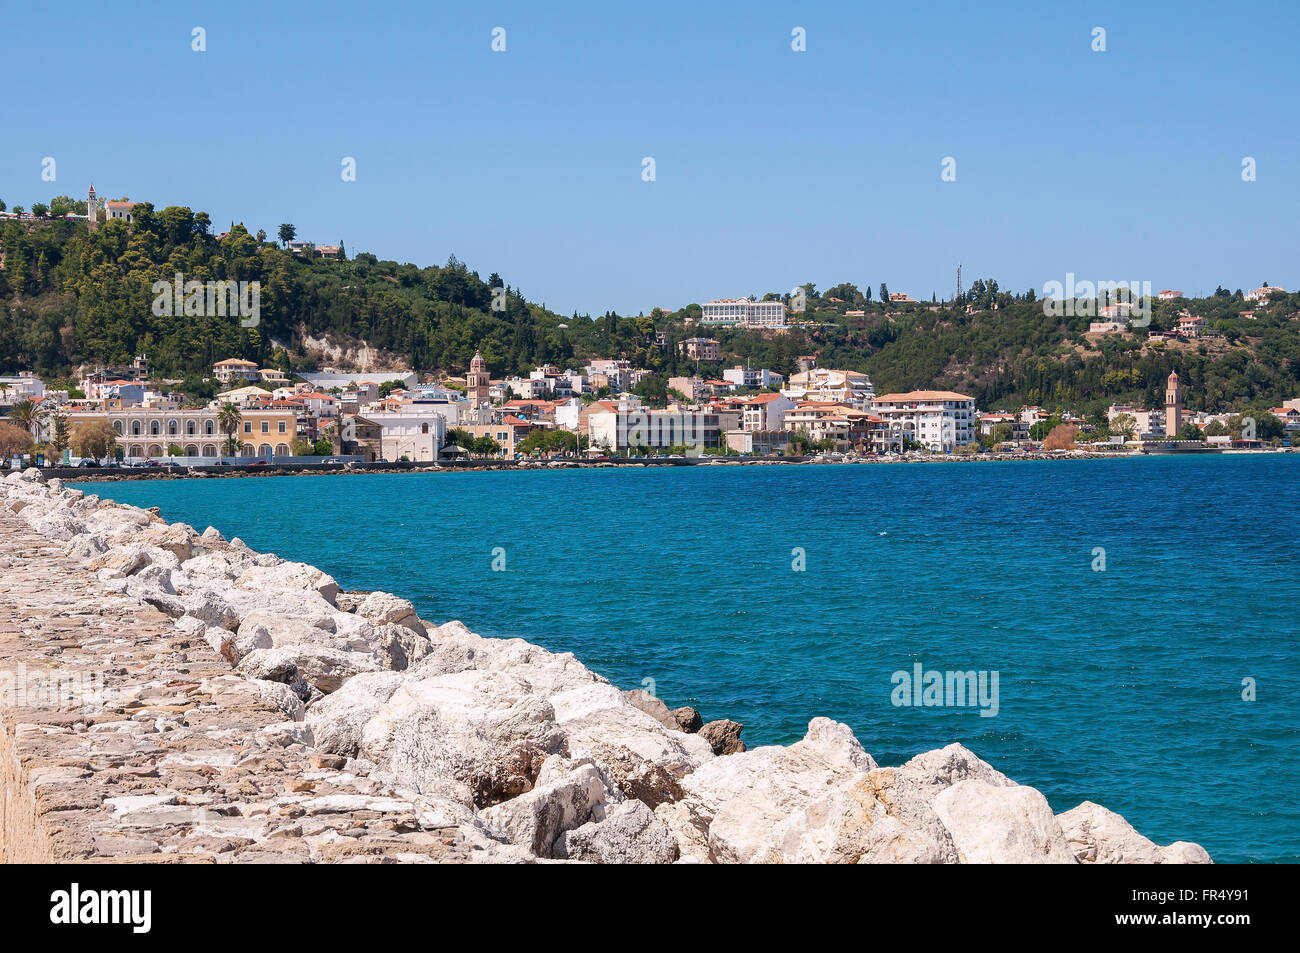 View of town of Zakynthos city, Greece Stock Photo